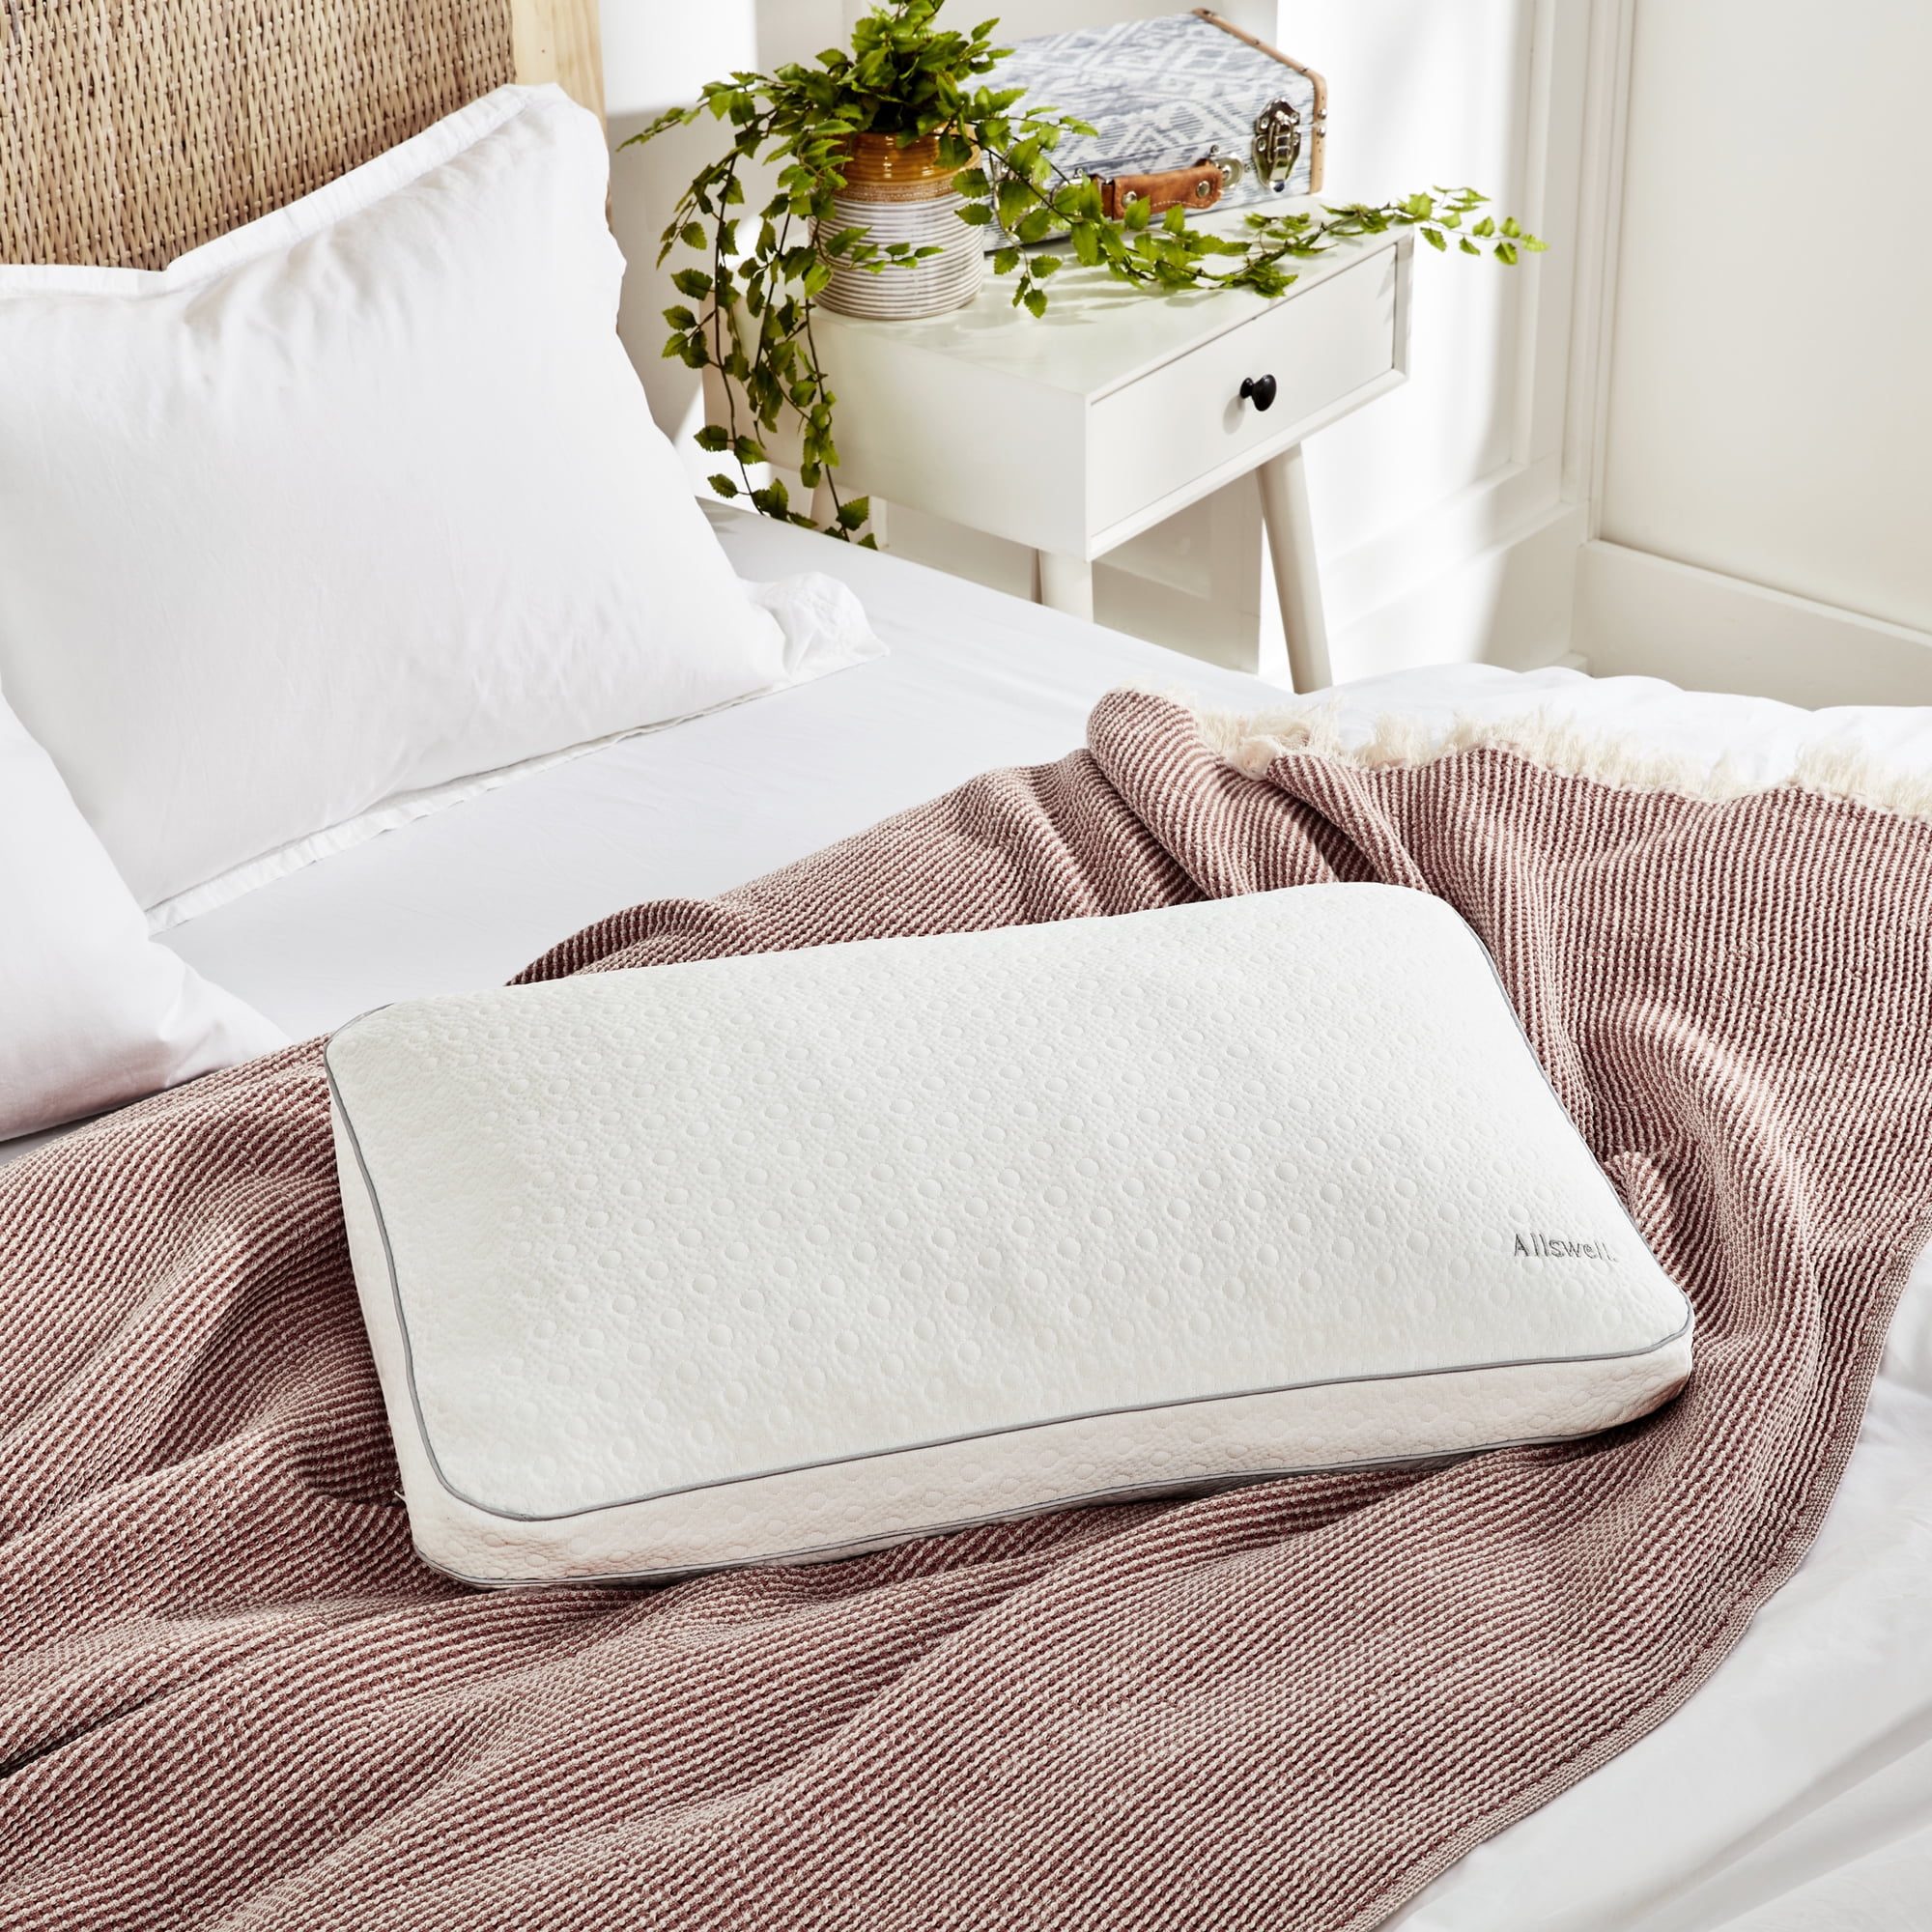 Allswell Side Sleeper Memory Foam Pillow, Standard/Queen